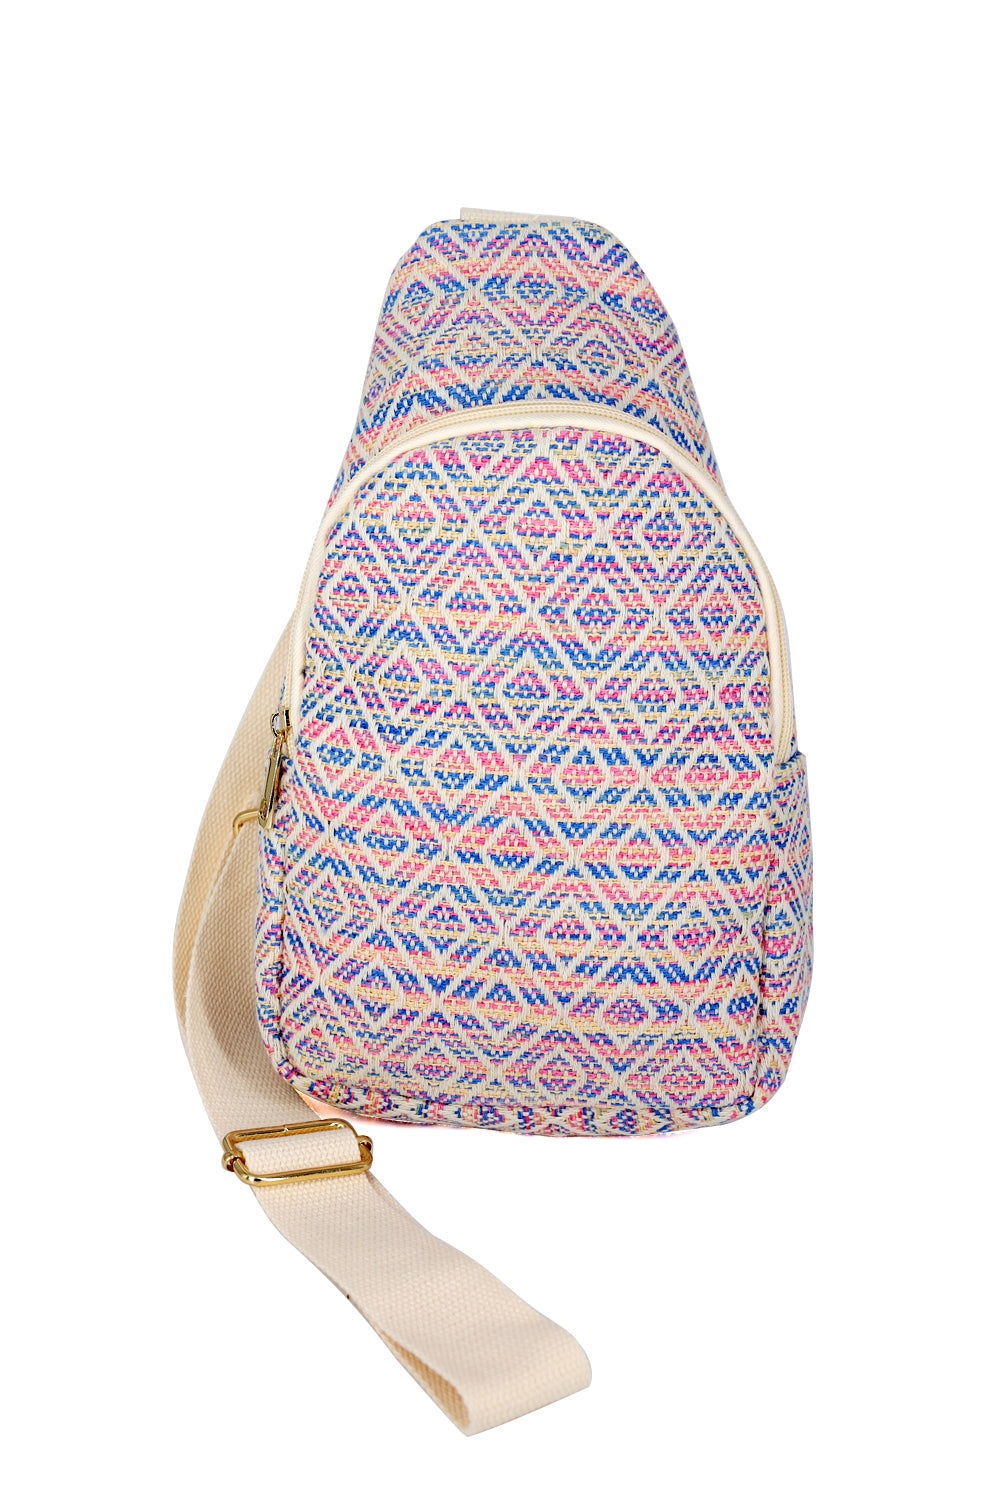 Aztec Pattern Sling Bag Pink - Pack of 6